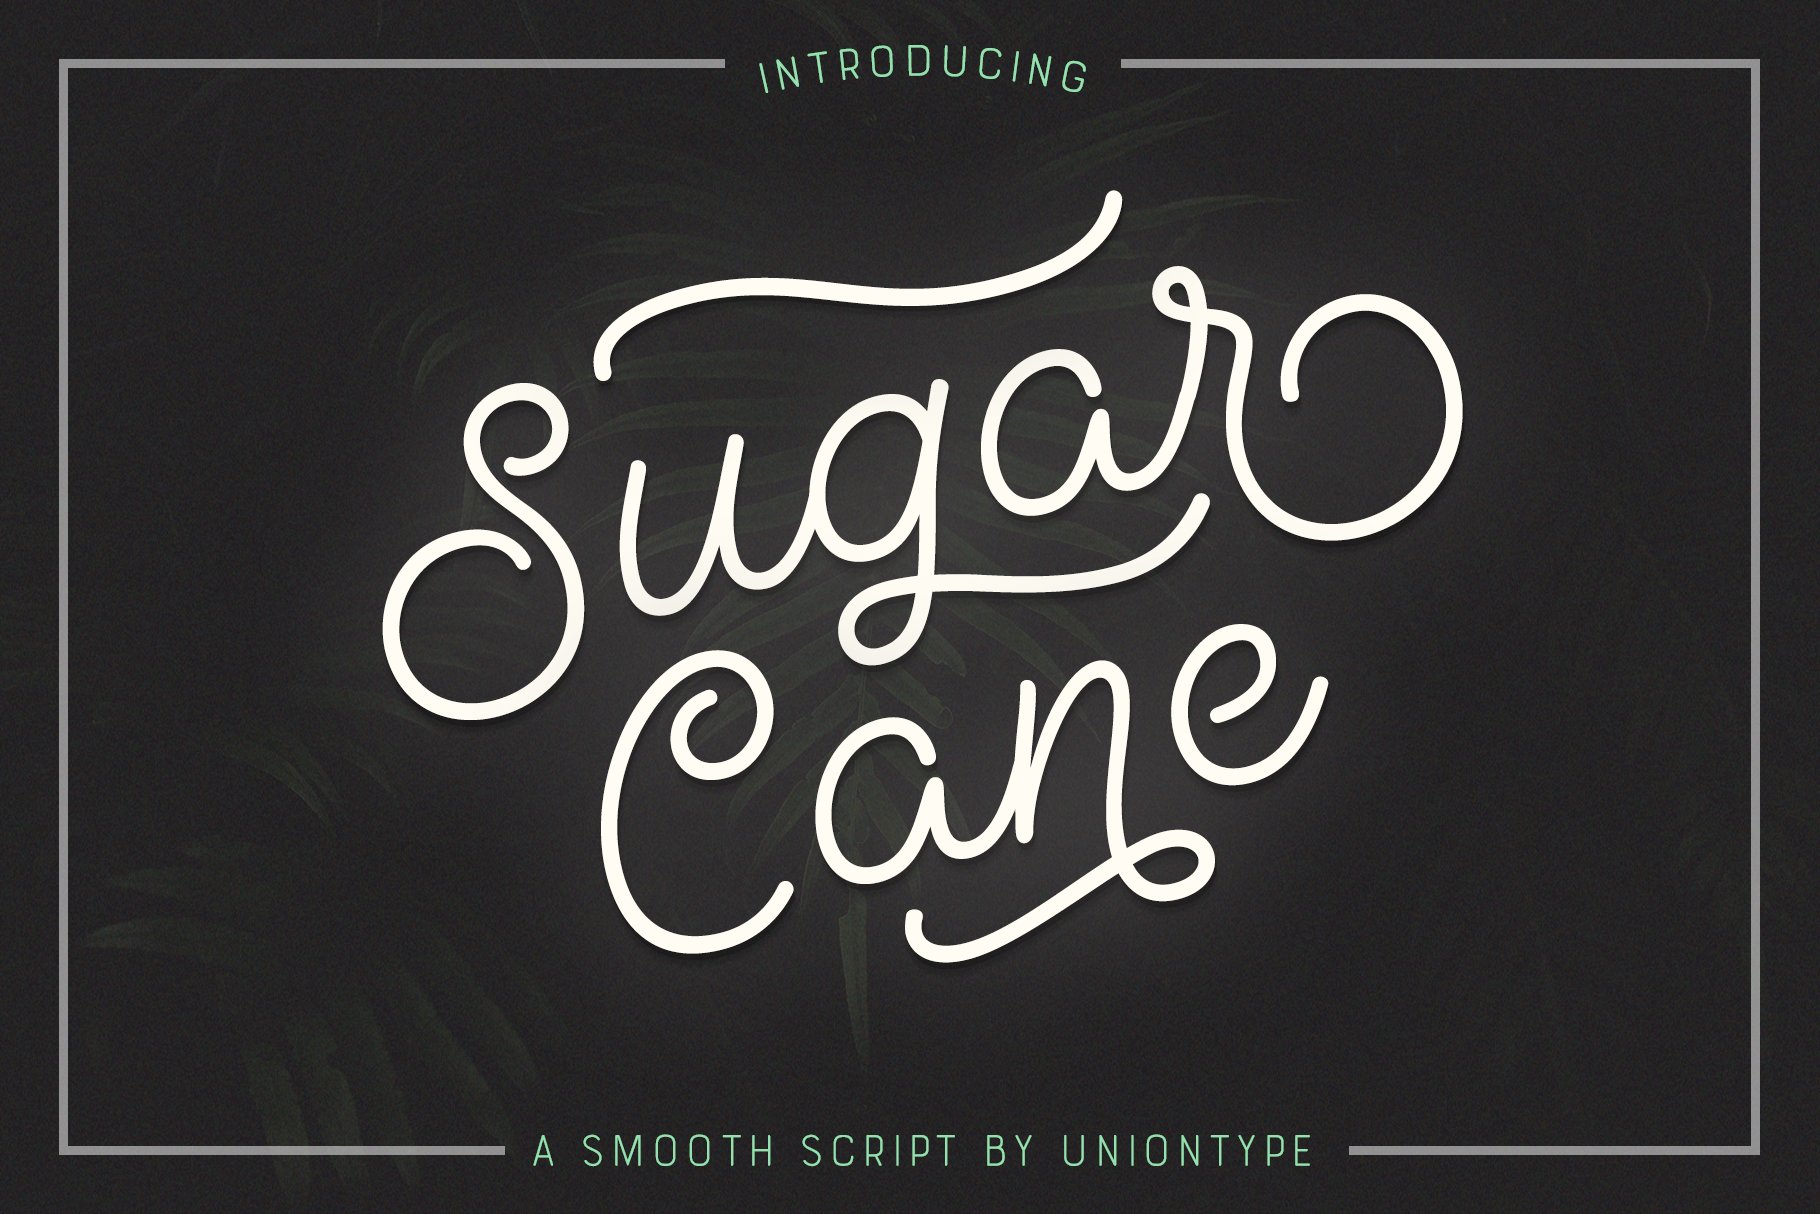 Sugar Cane cover image.